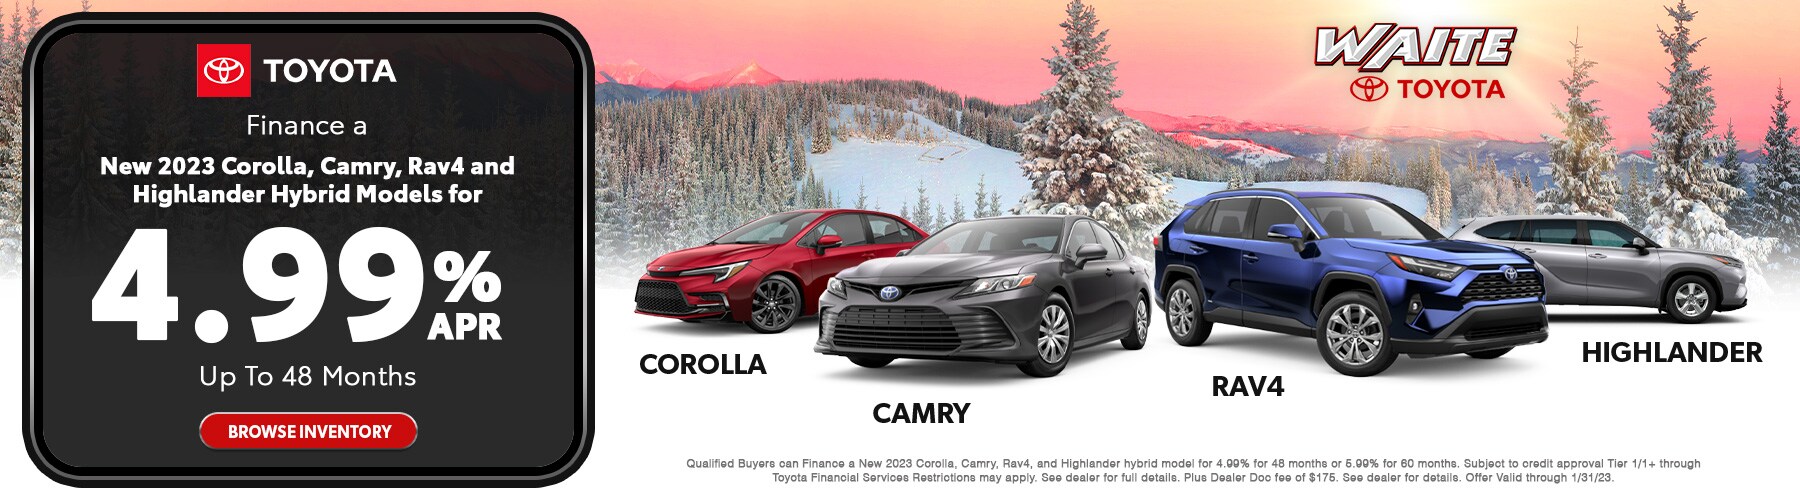 New 2023 Corolla, Camry, Rav4 and Highlander Hybrid Models